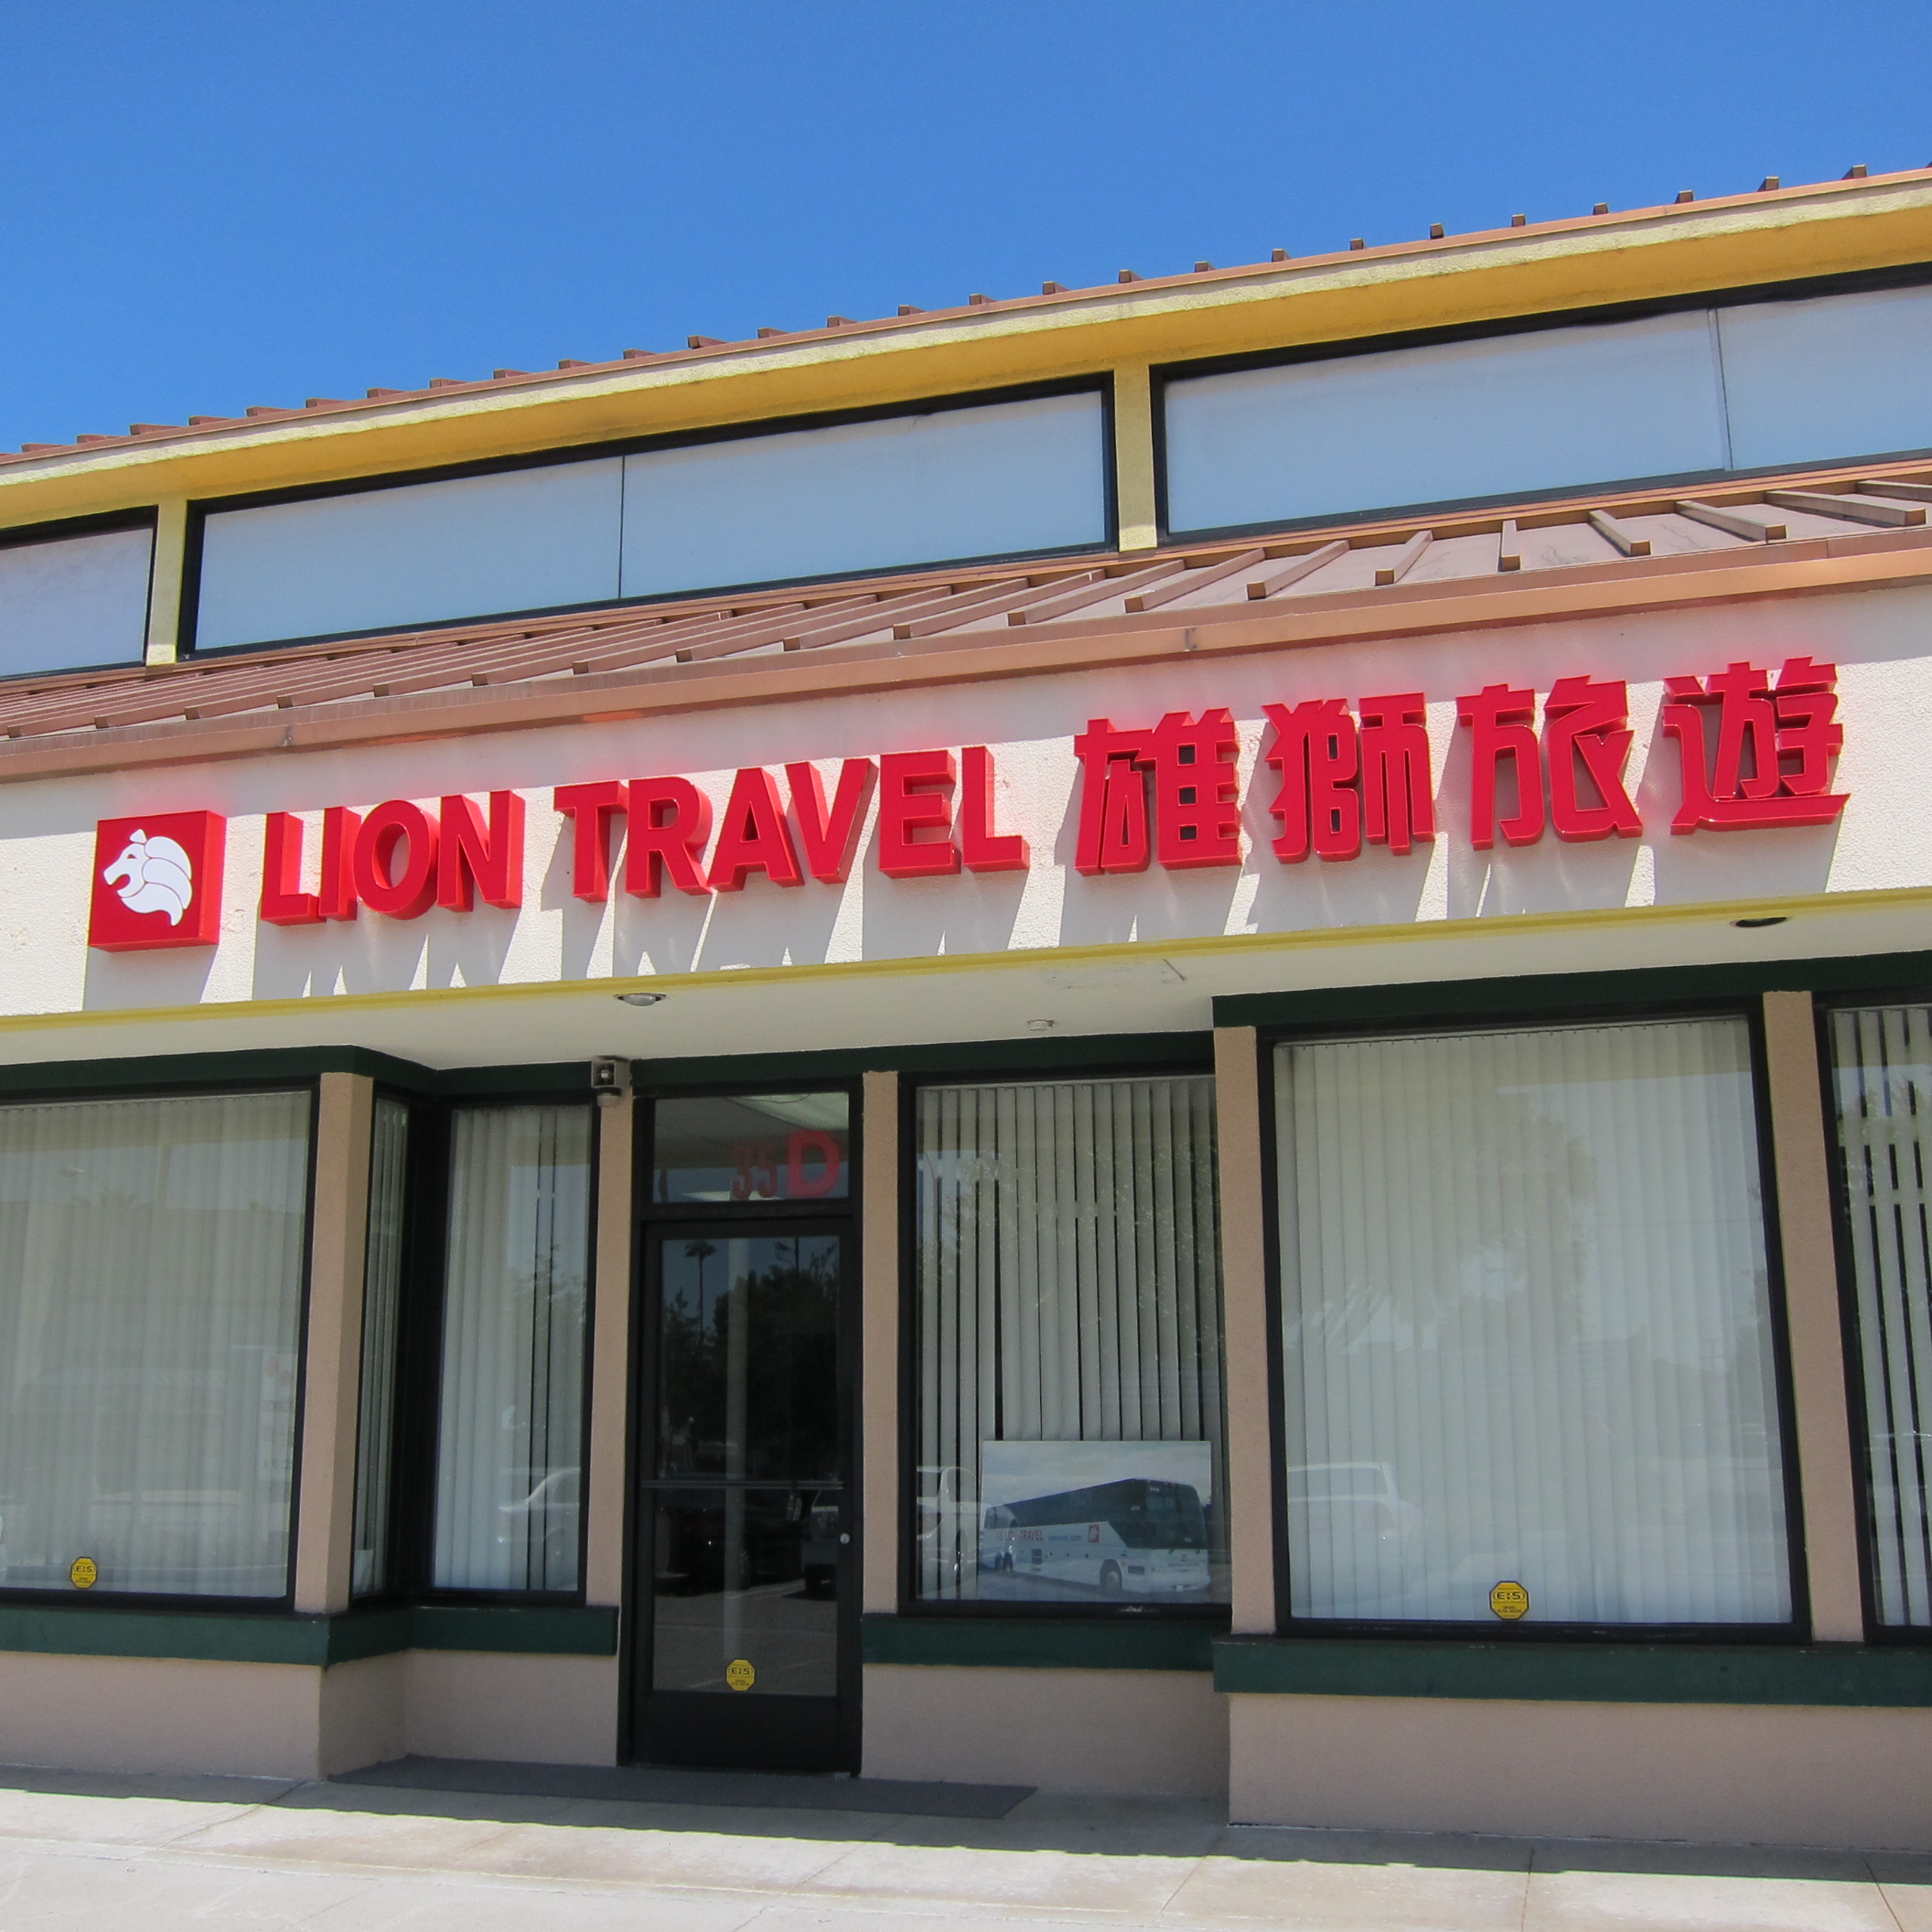 Lion Travel Los Angeles Branch